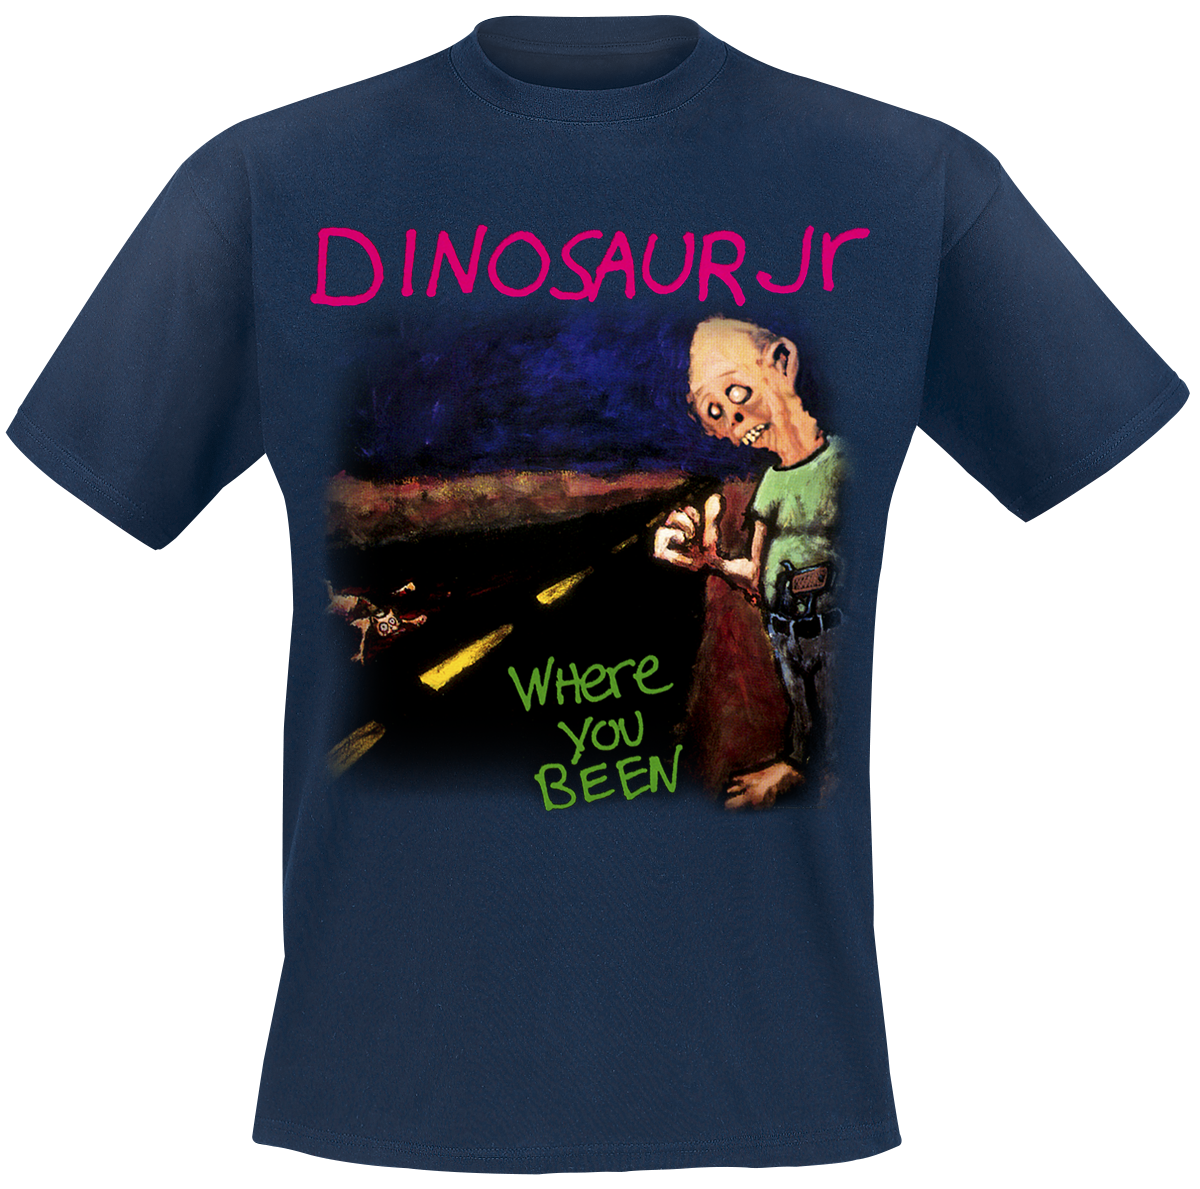 Dinosaur Jr. - Where You Been - T-Shirt - blue image